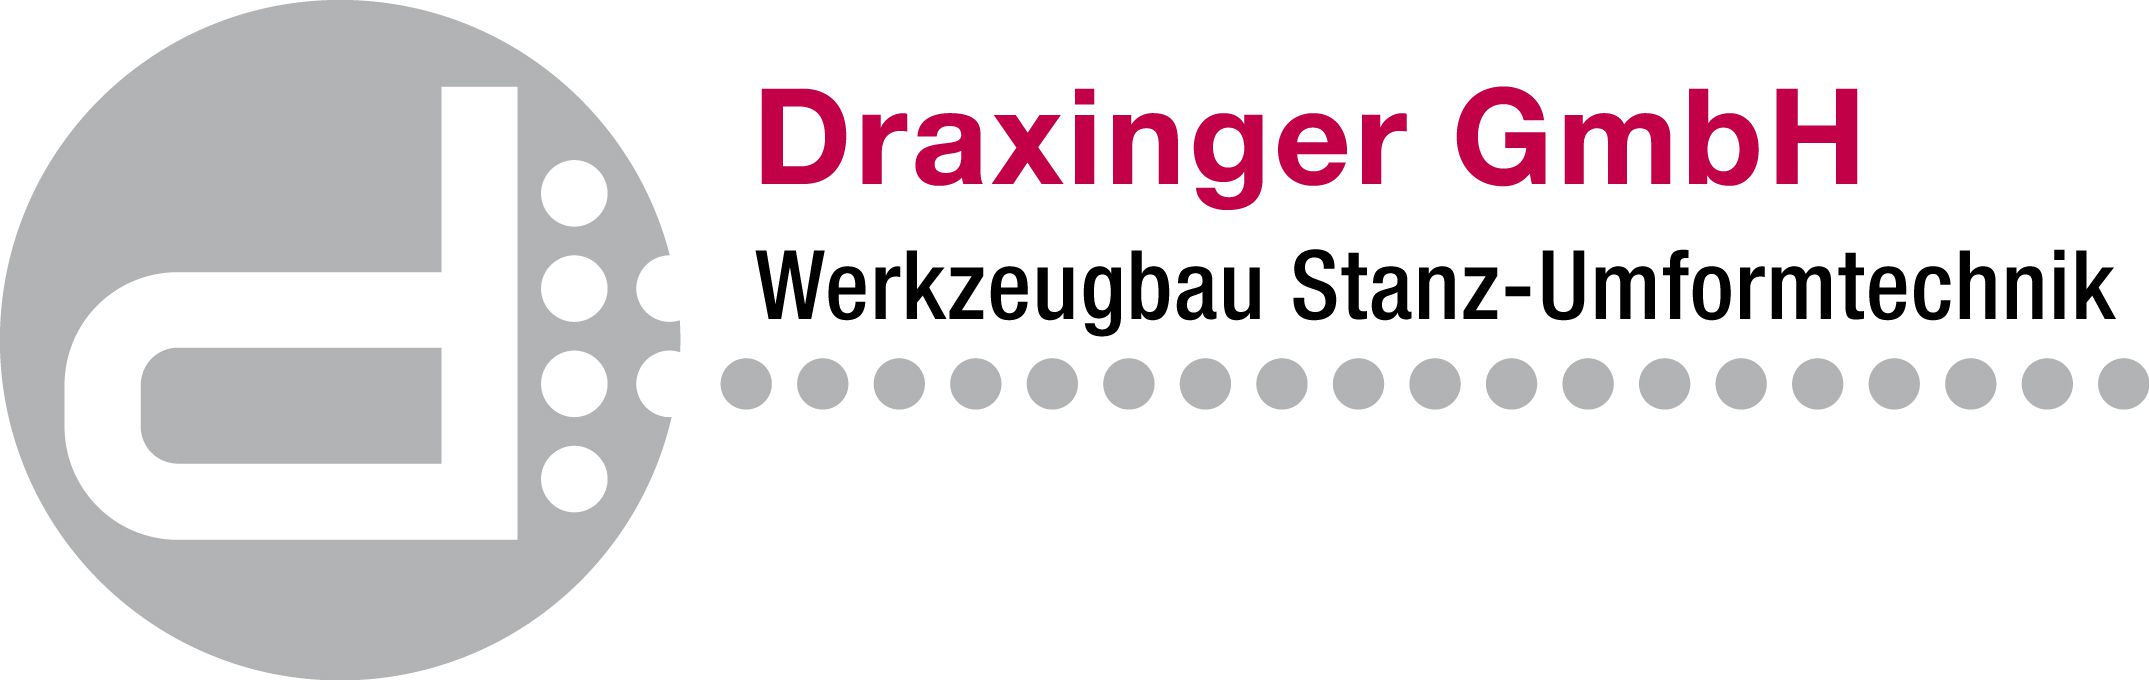 Draxinger GmbH